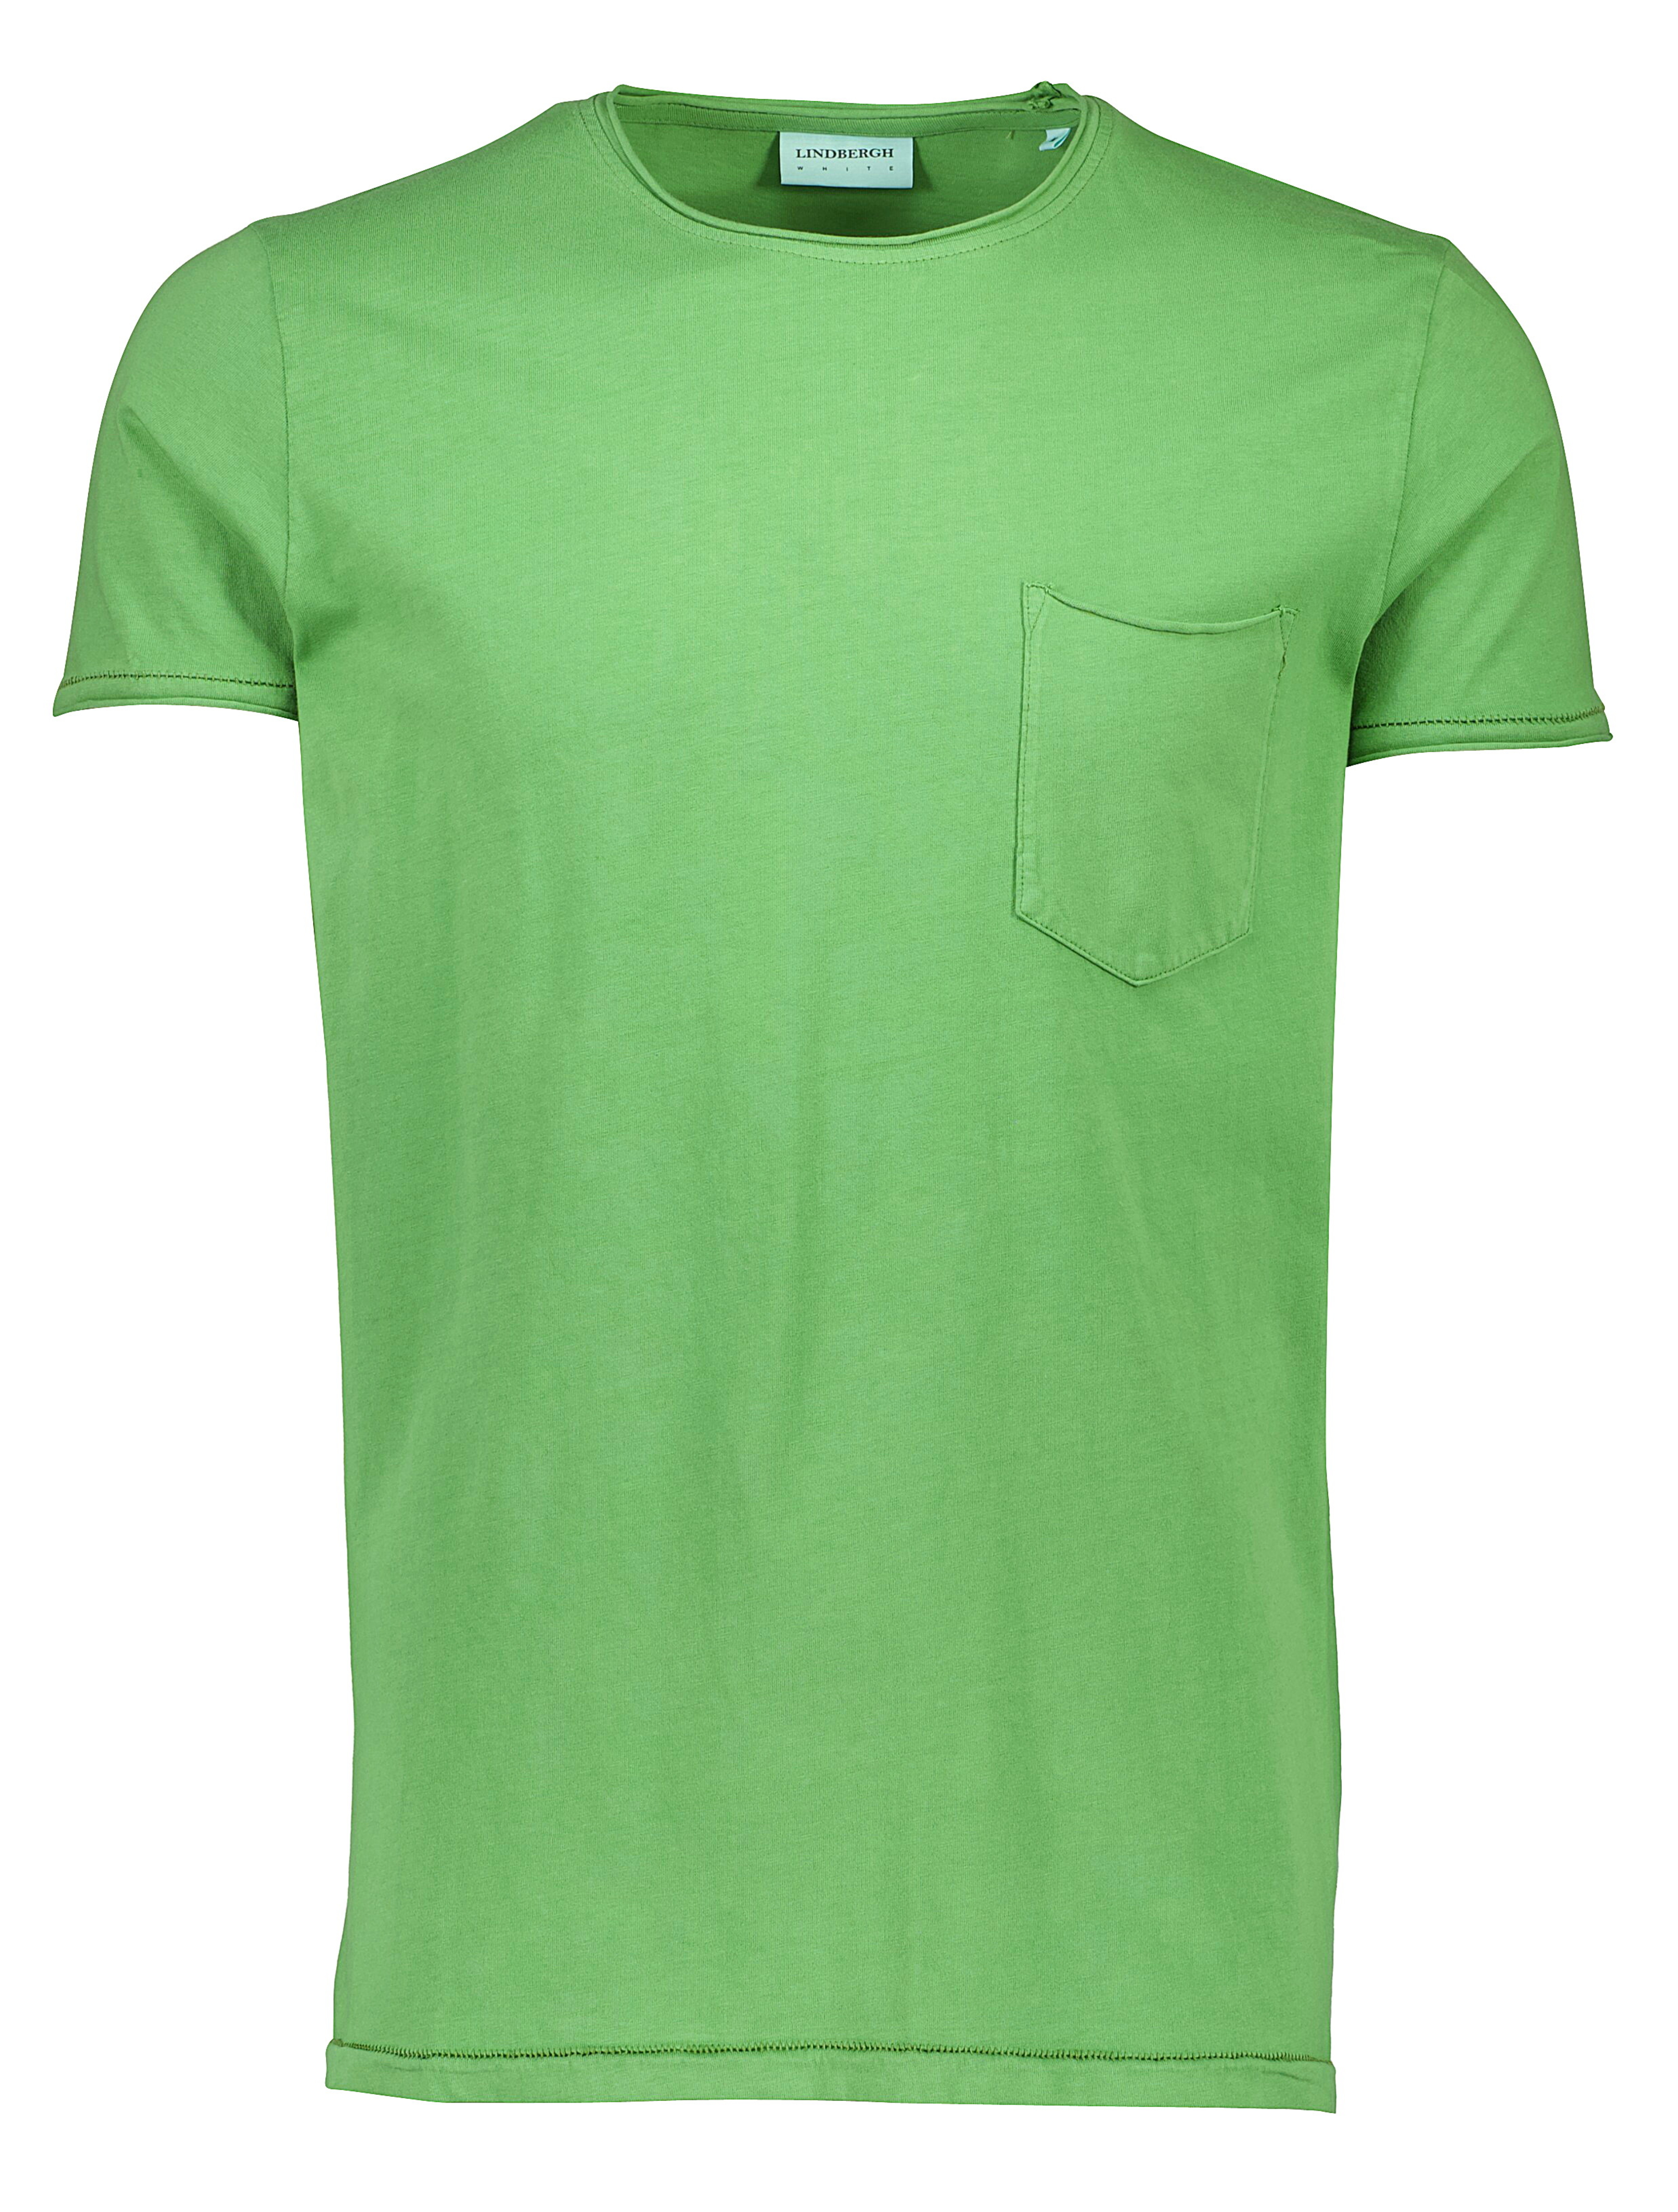 Lindbergh T-Shirt grün / green